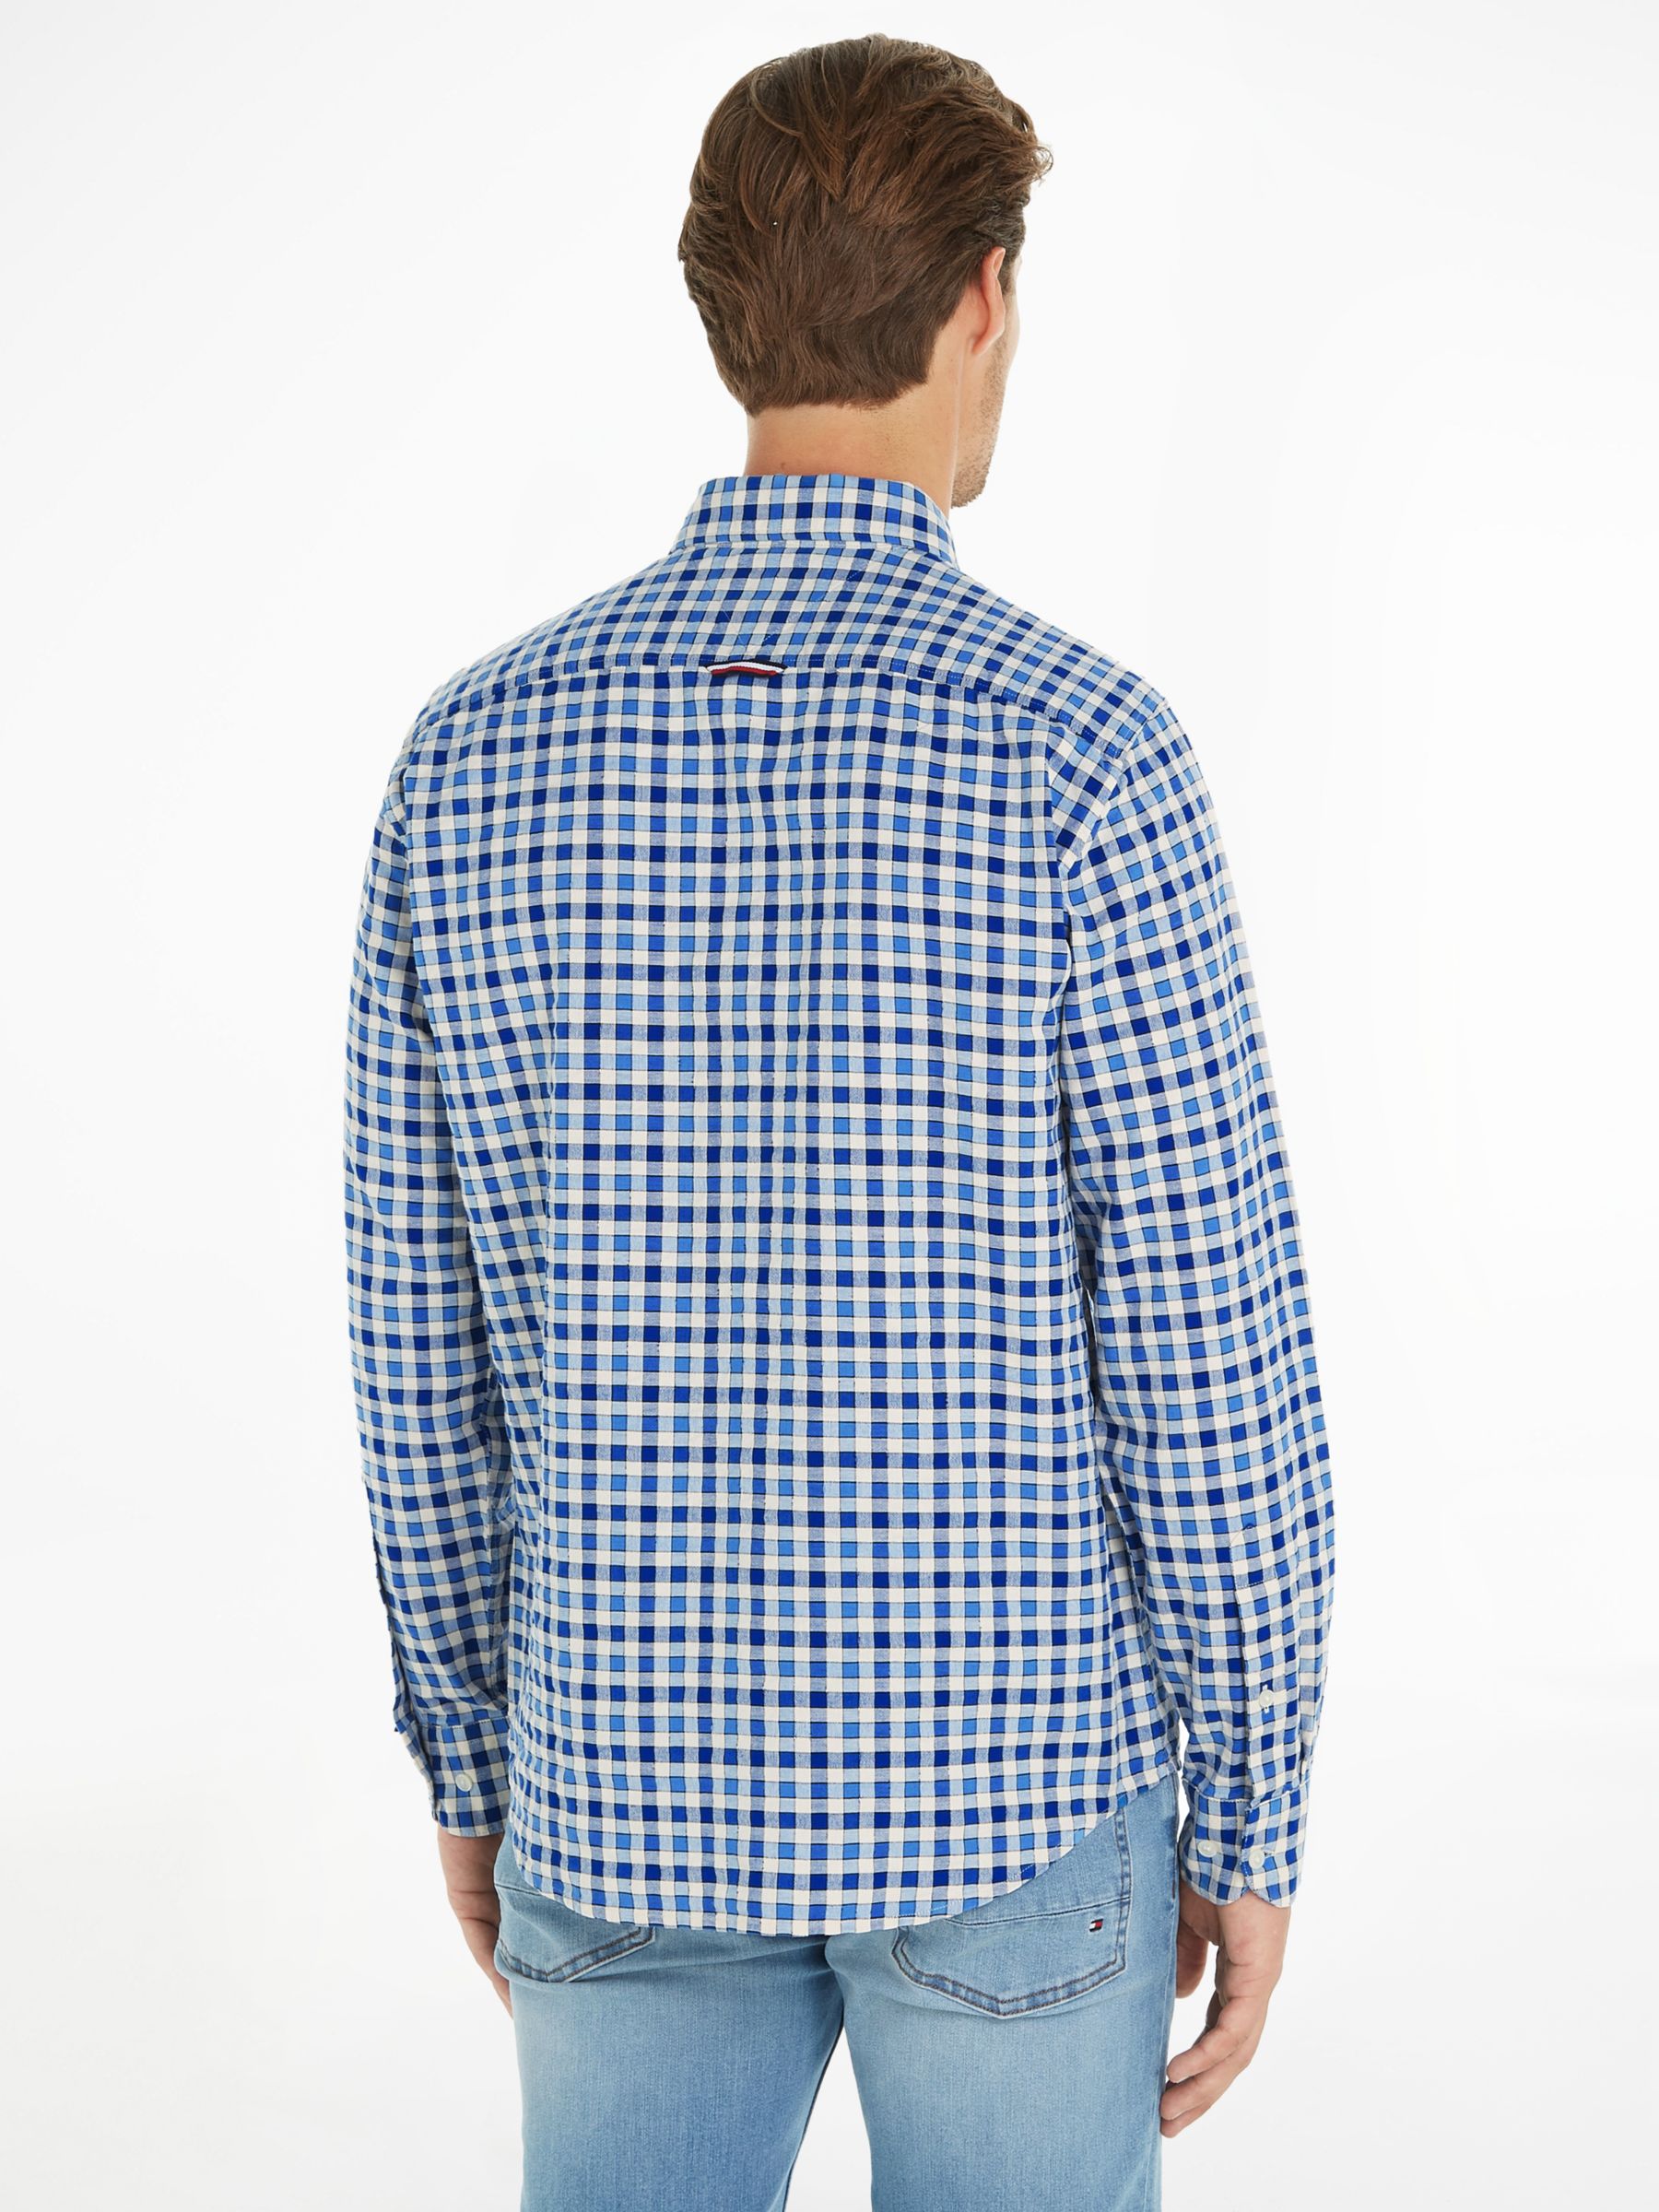 Buy Tommy Hilfiger Oxford Gingham Long Sleeve Shirt Online at johnlewis.com